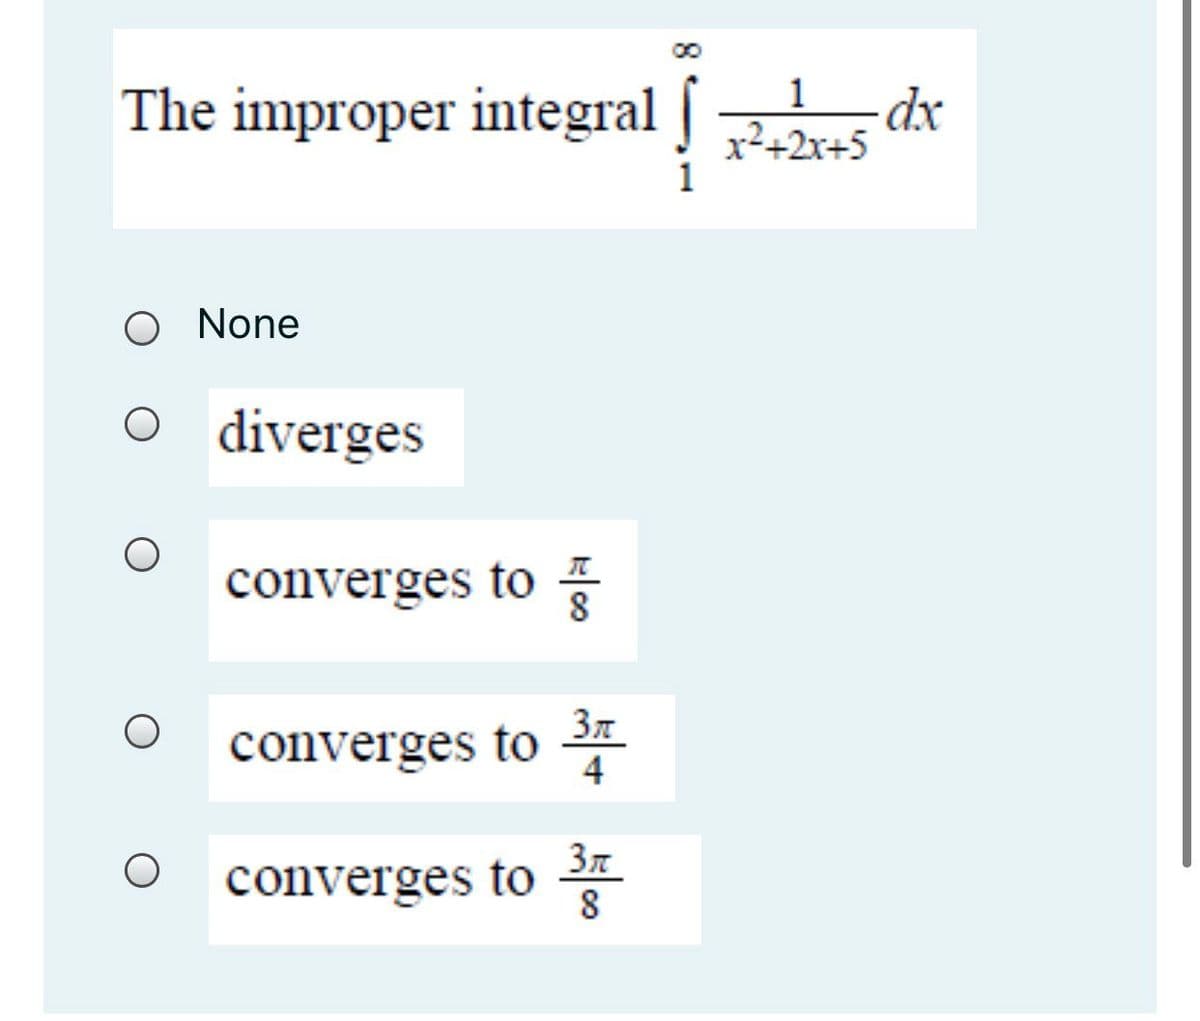 The improper integral [ s dr
1
-dx
x2+2x+5
O None
O diverges
converges to
37
converges to *
4
converges to
8
